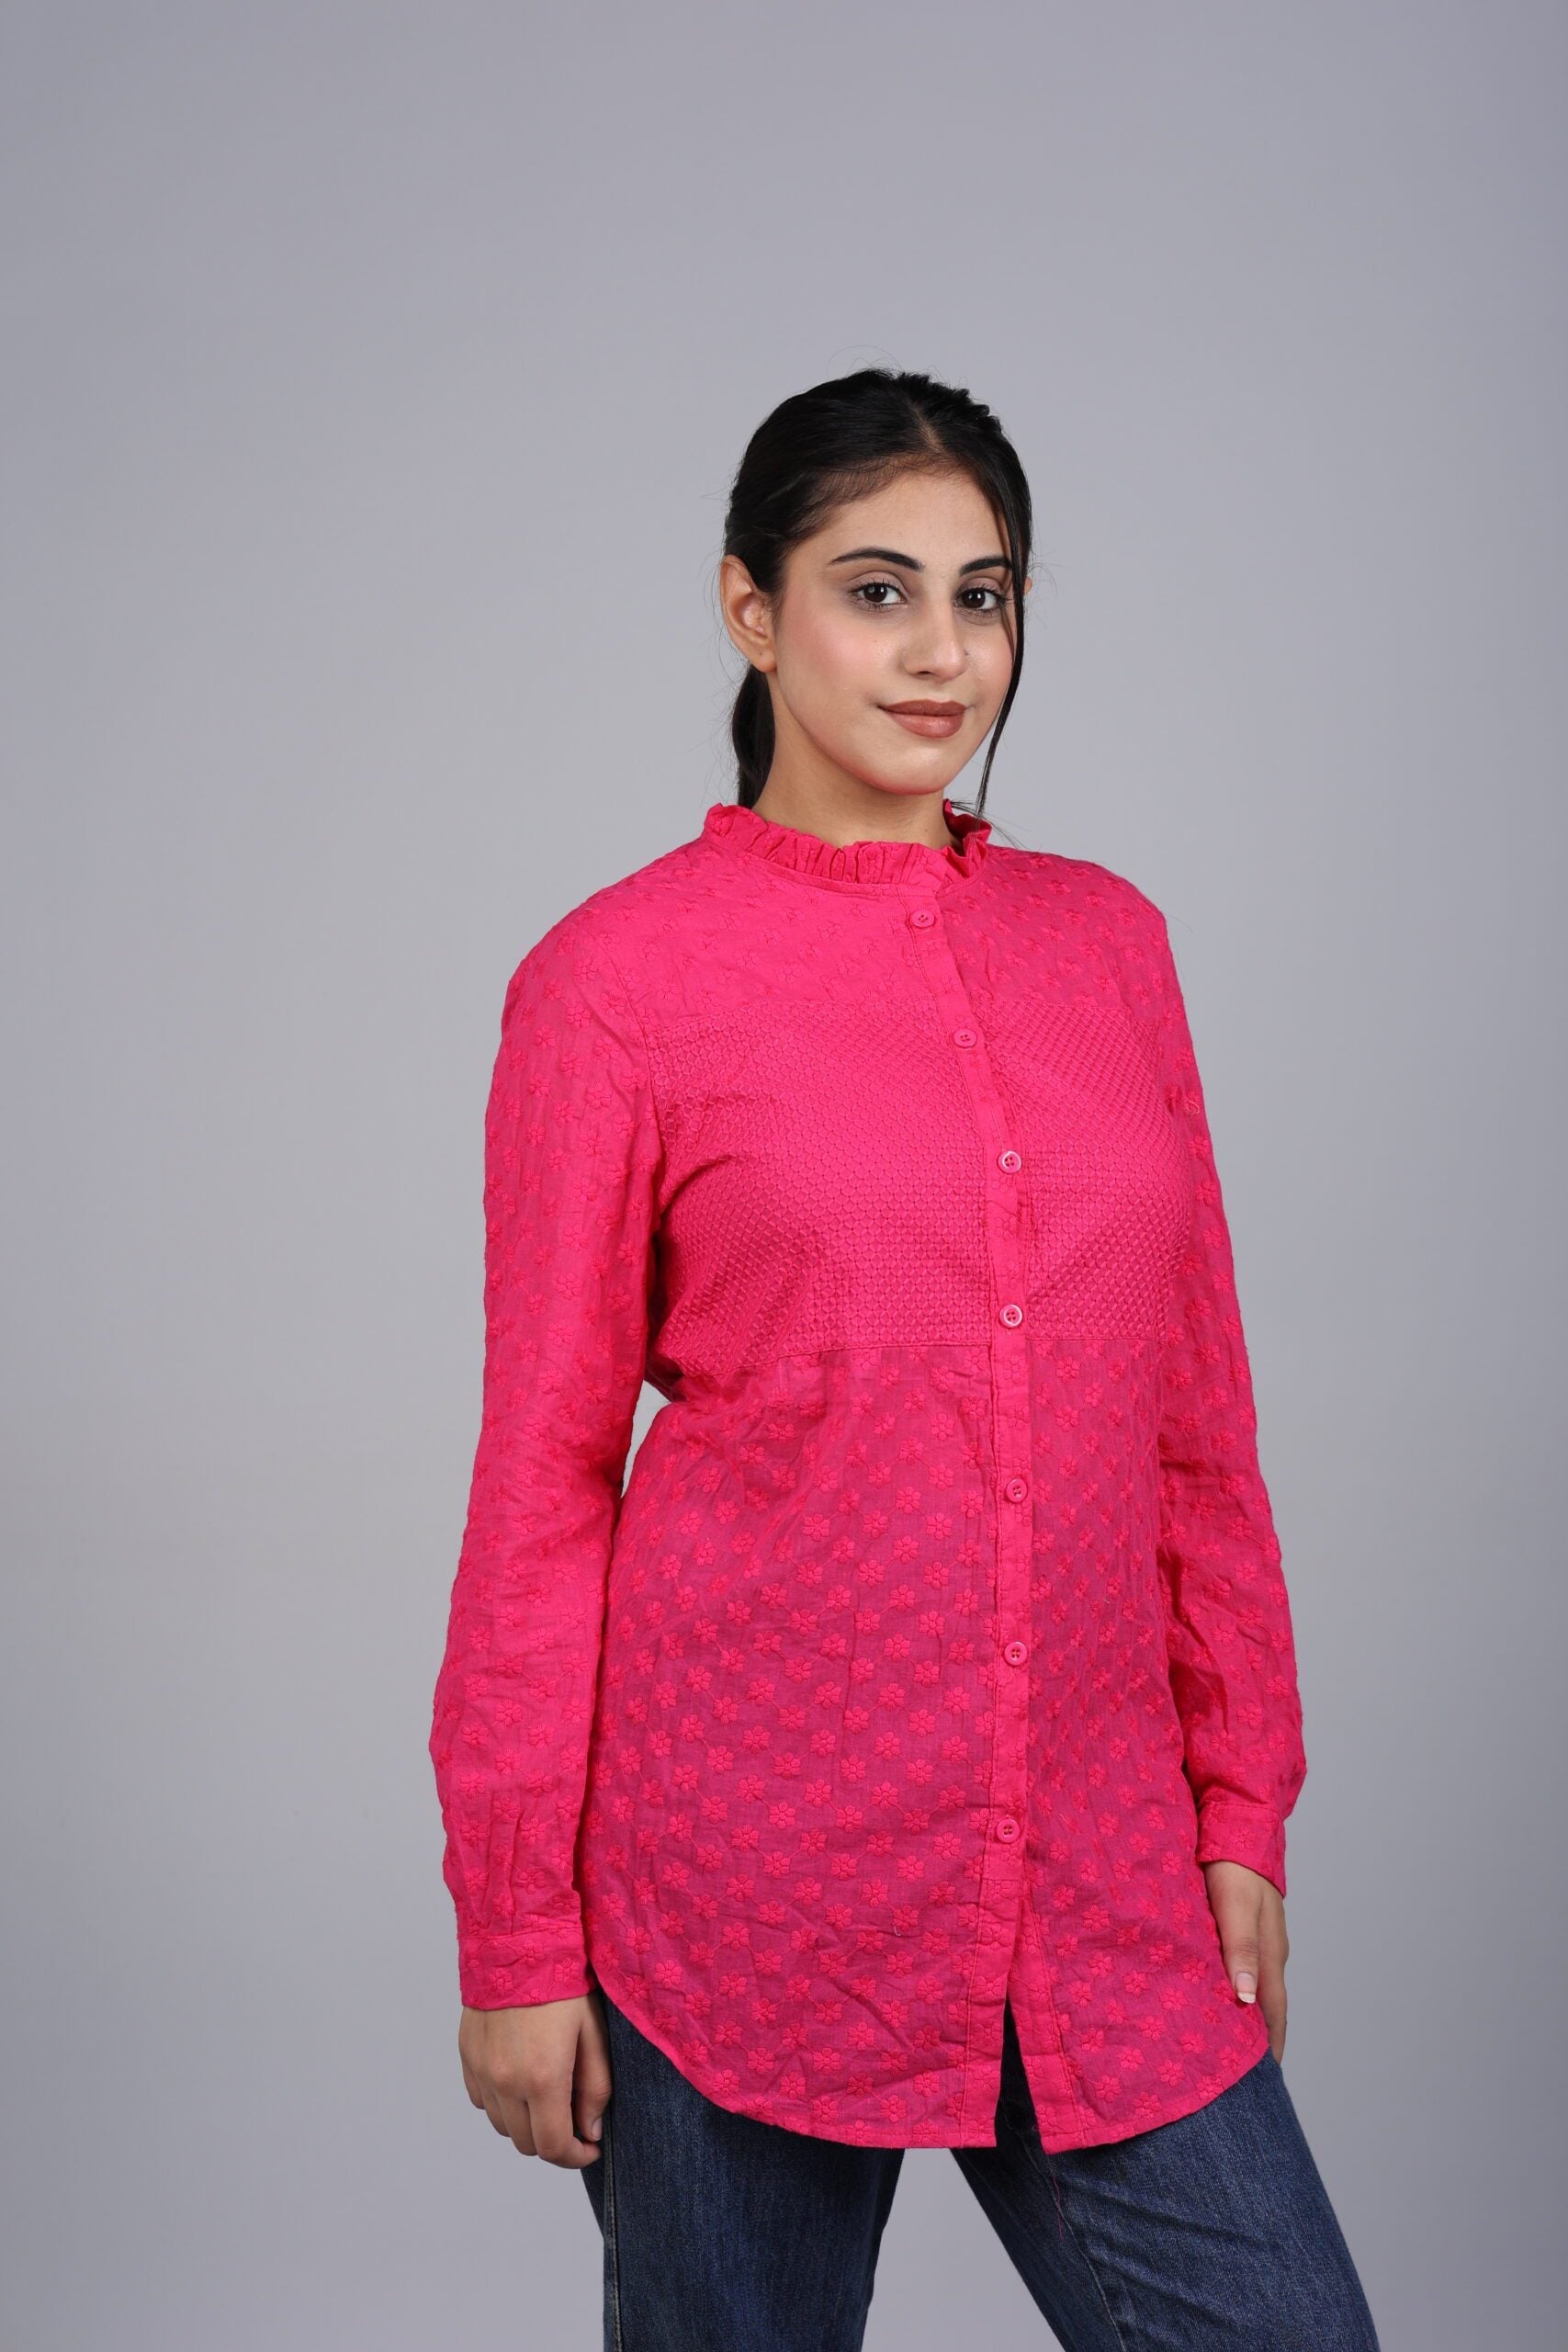 Chicken Shirt Designer (Hot Pink) Unleash Your Vibrant Style